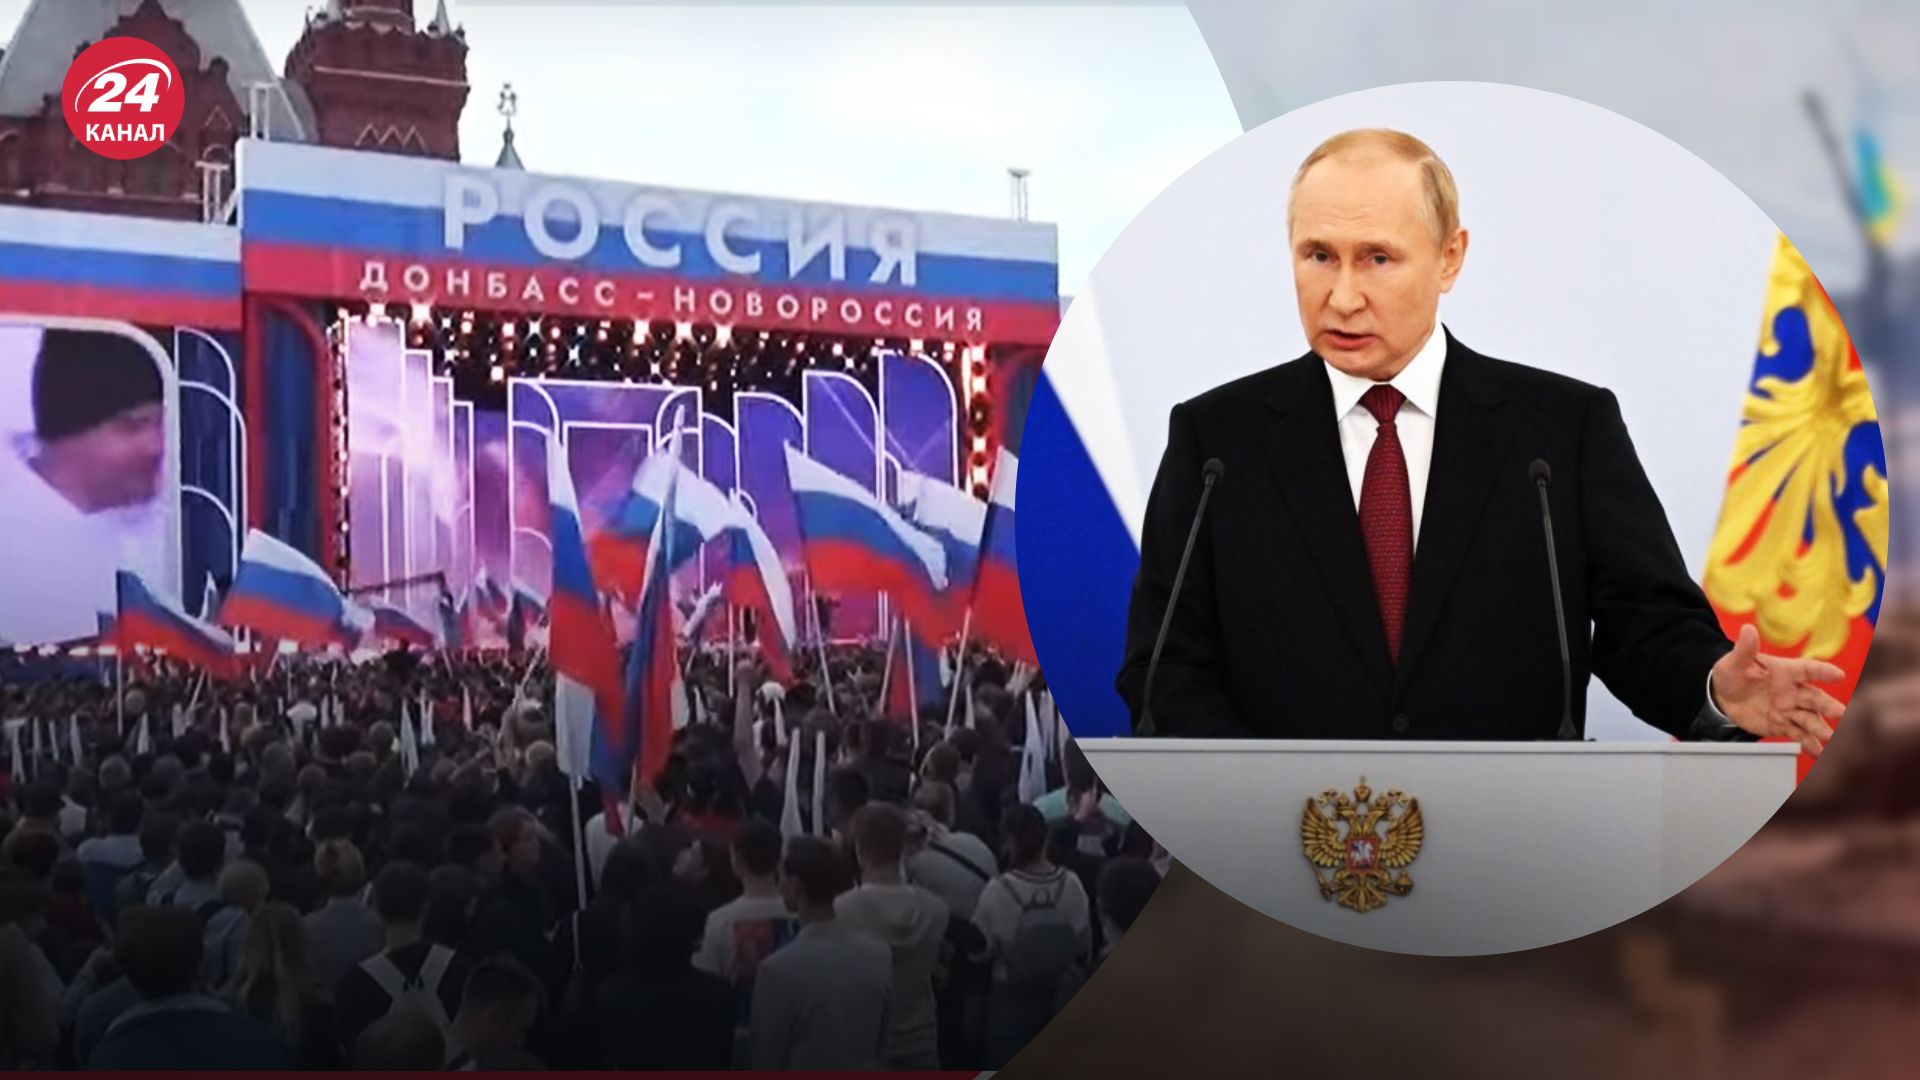 В речи Путин снова жаловался на националистов - 24 Канал